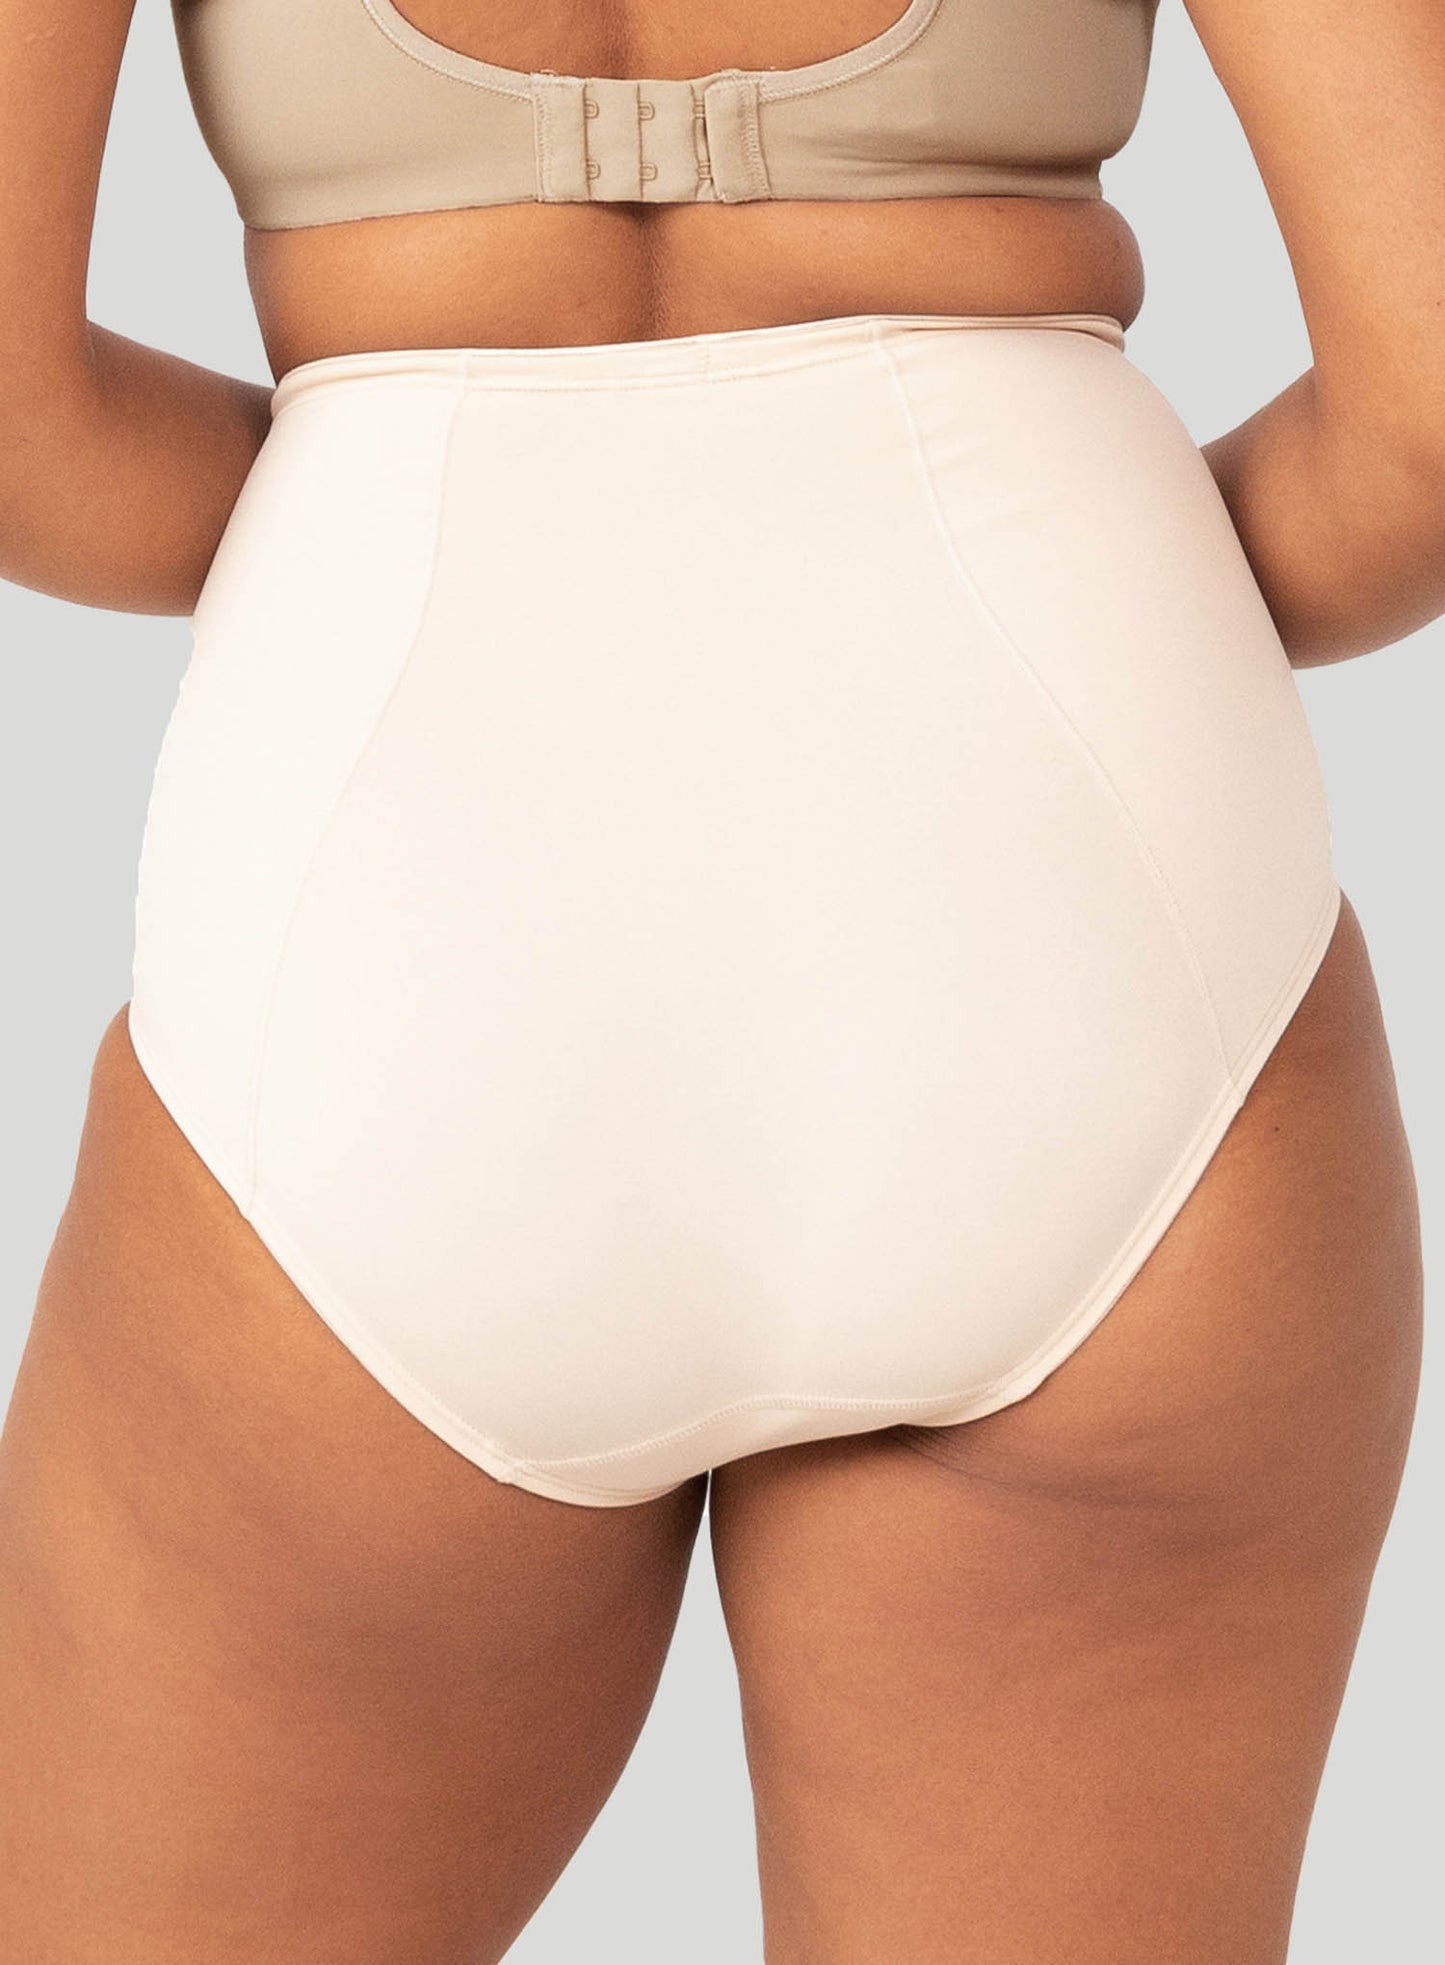 Triumph: Minimiser – Teint Panty Hips DeBra\'s